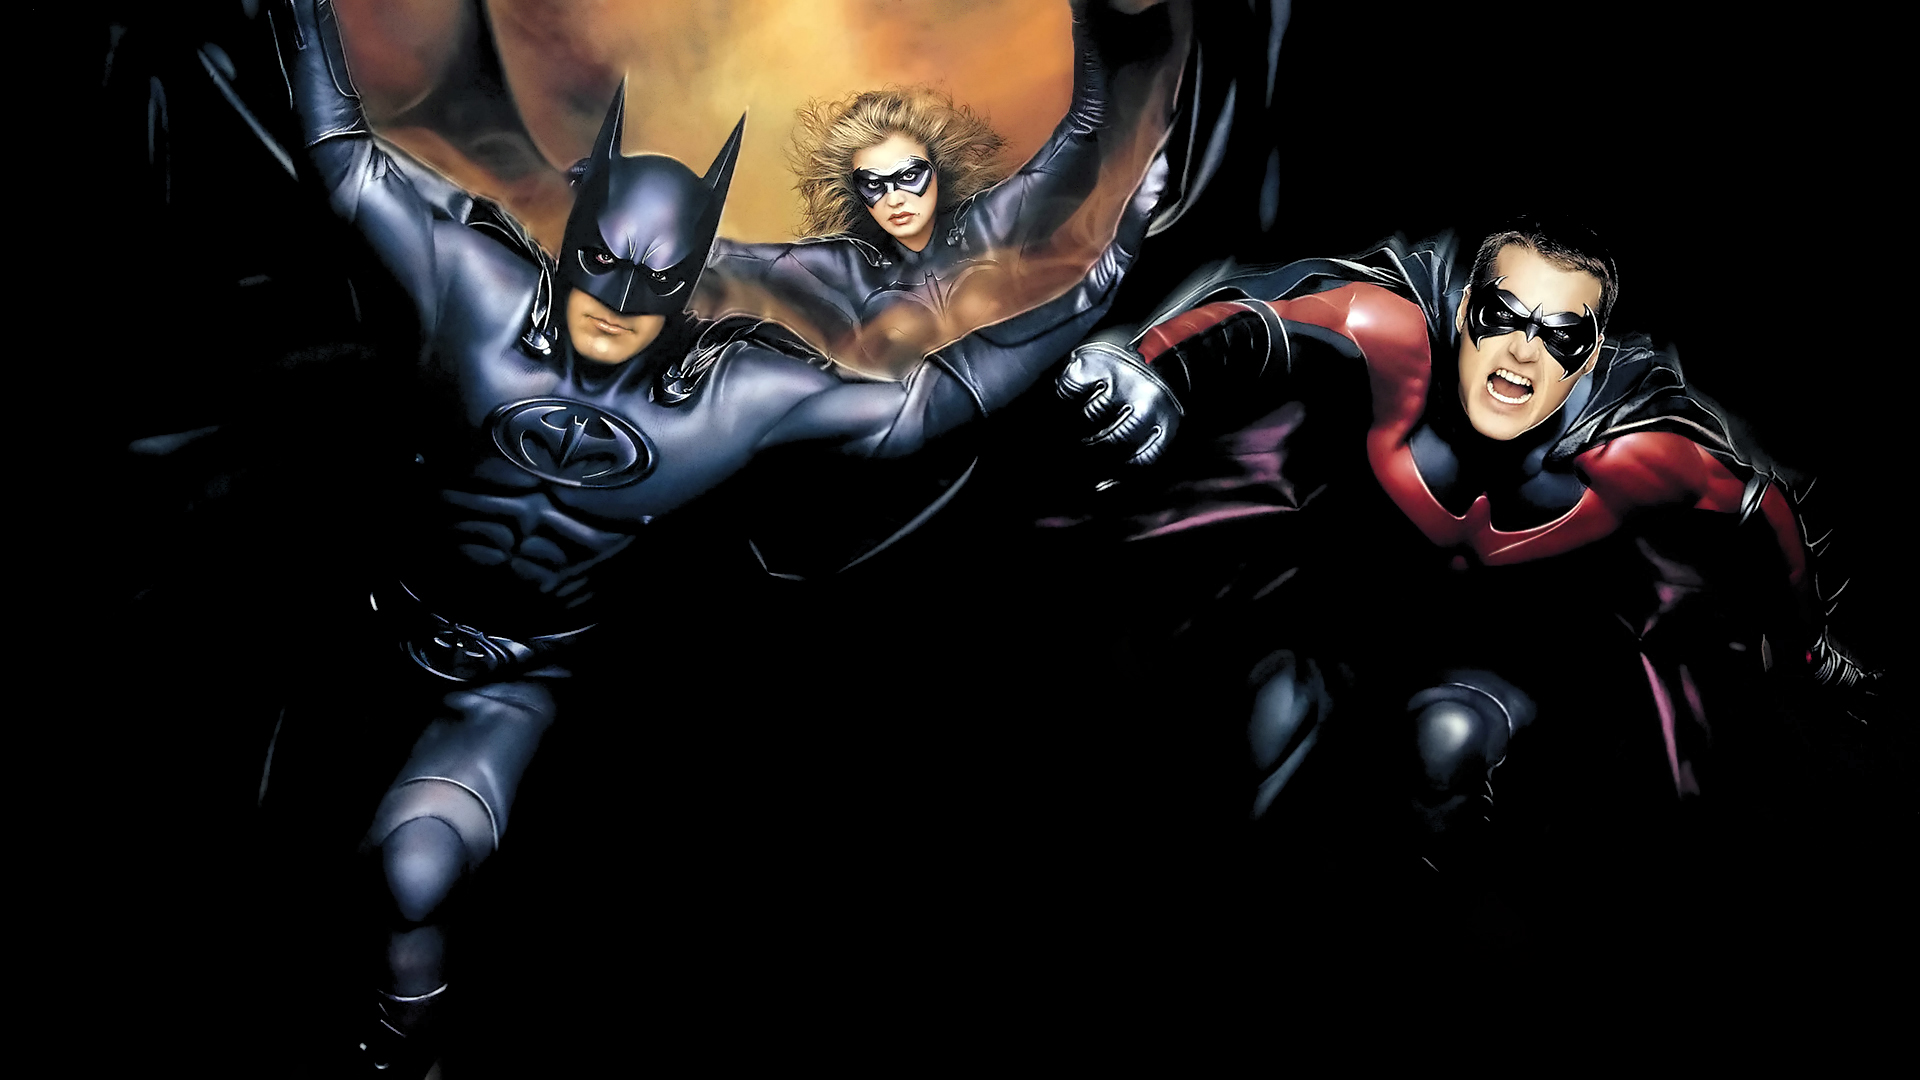 batman and robin wallpaper,fictional character,superhero,batman,supervillain,justice league